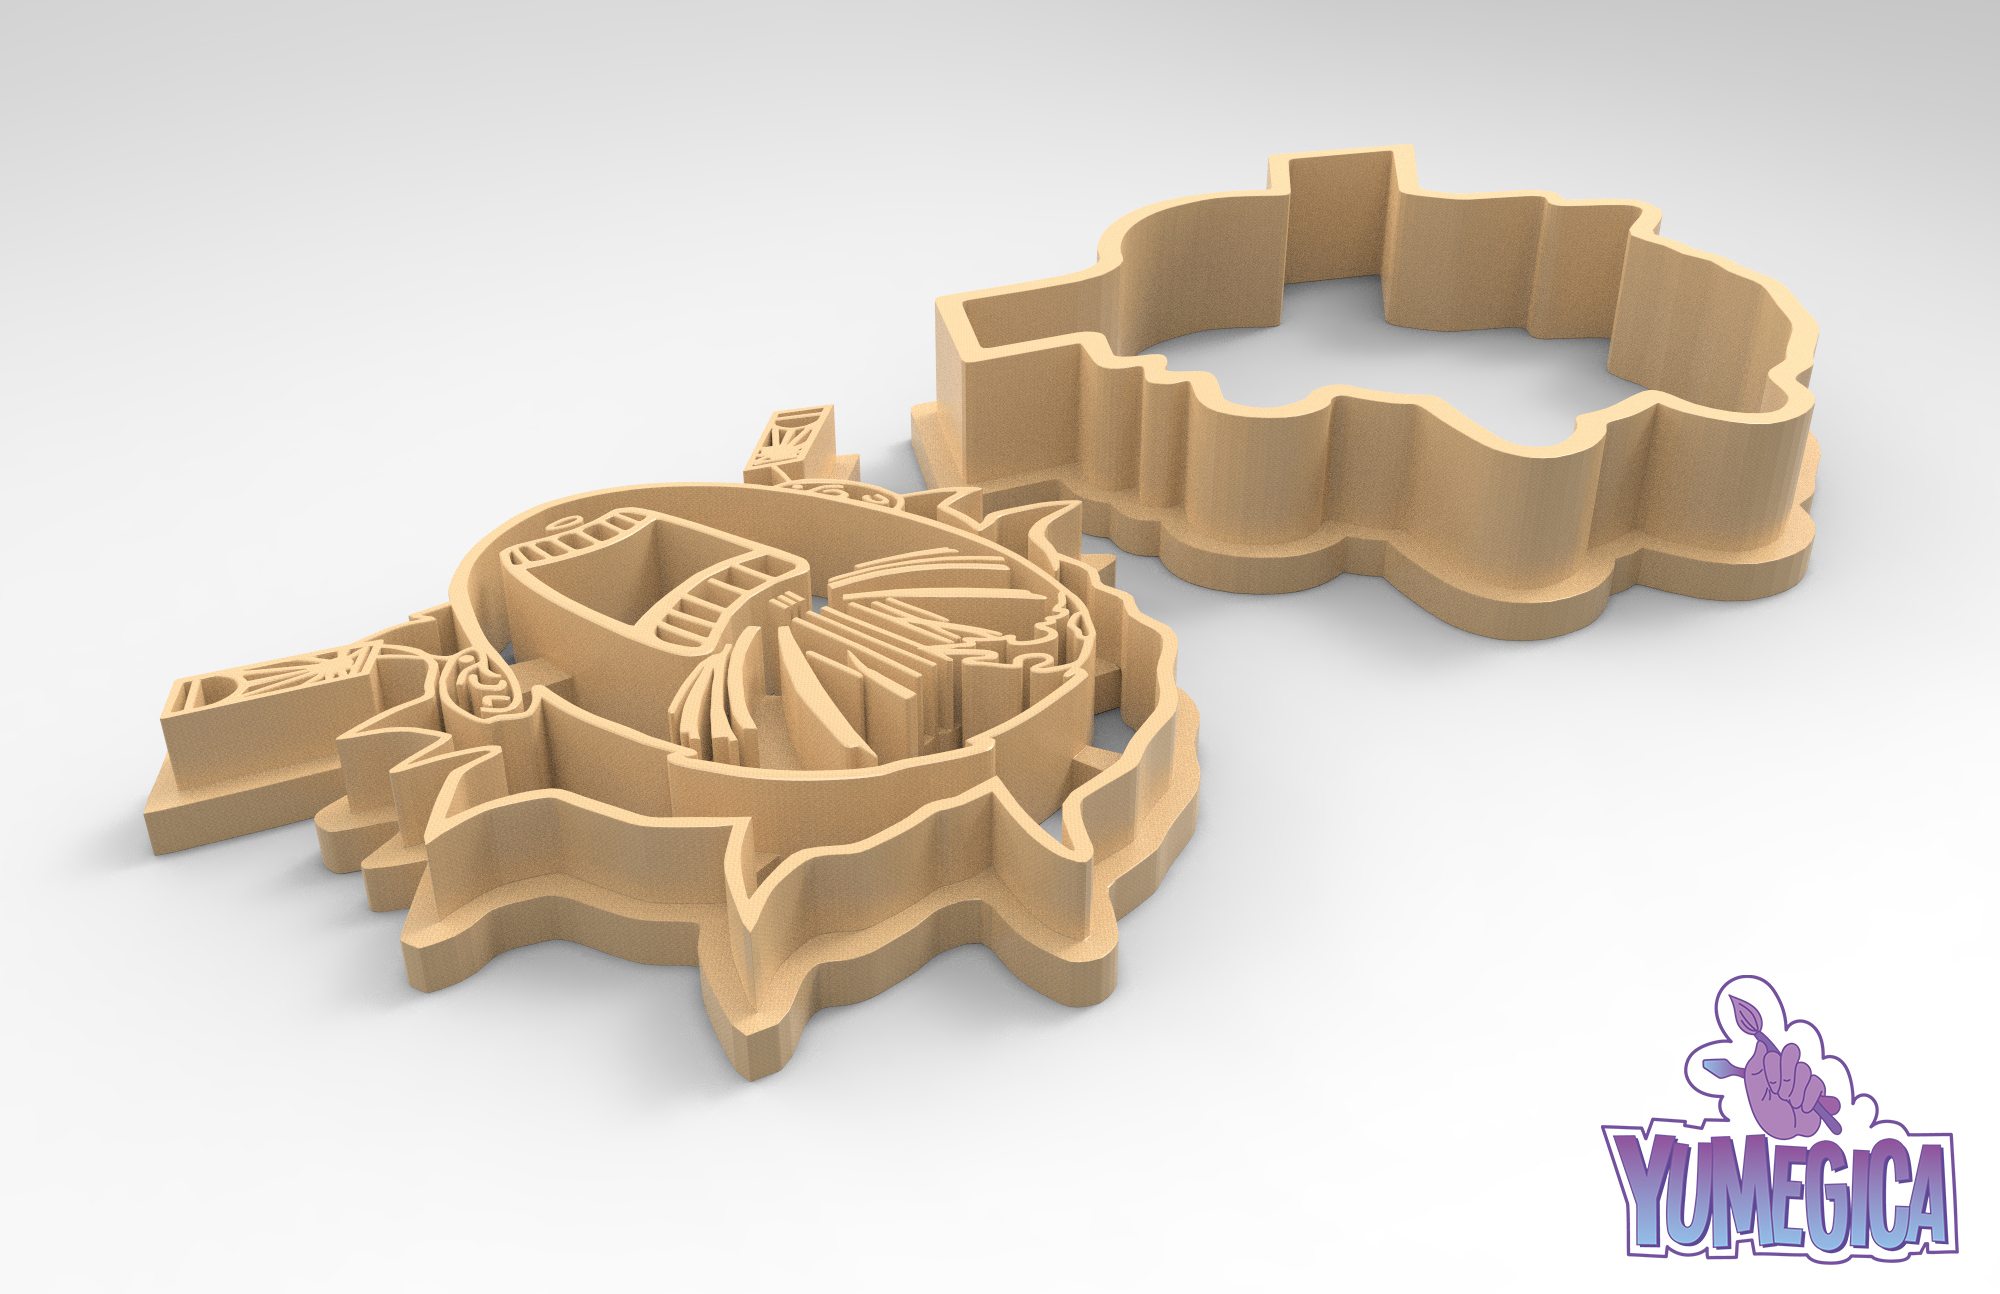 3D file Tanjiro - Kimetsu no Yaiba・3D printable model to download